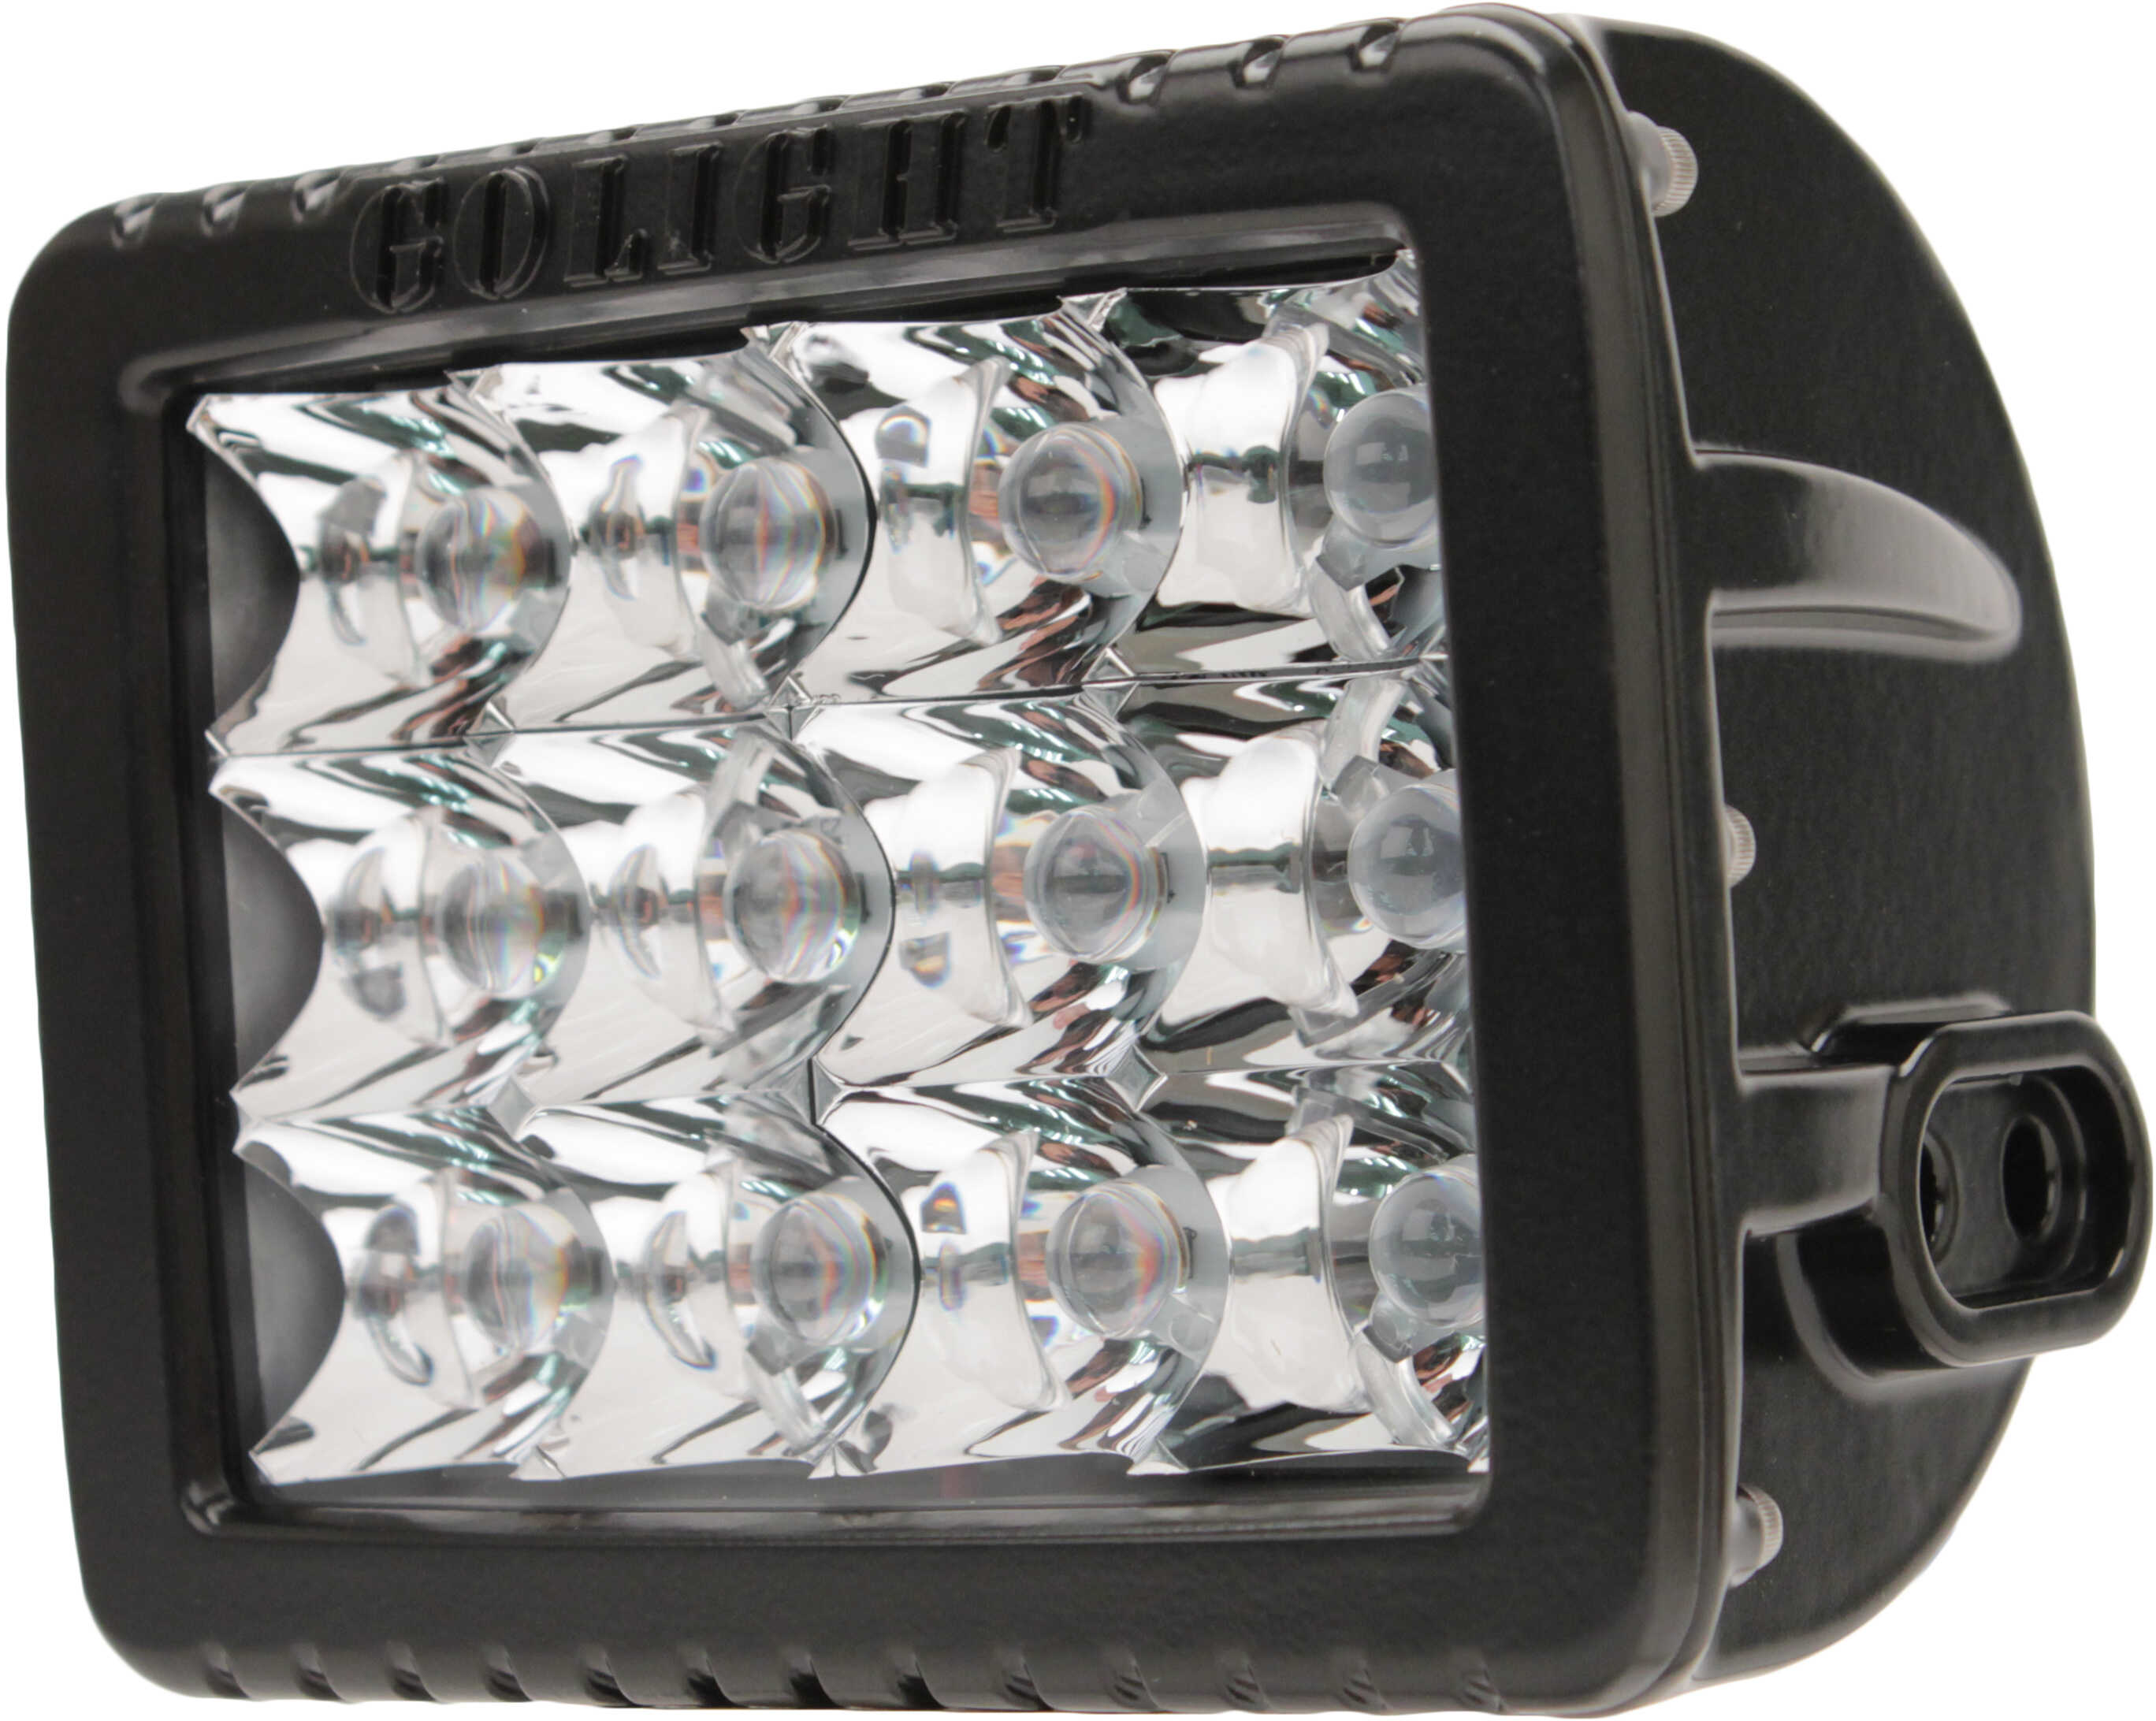 Golight GXL Fixed Mount LED Spotlight - Black